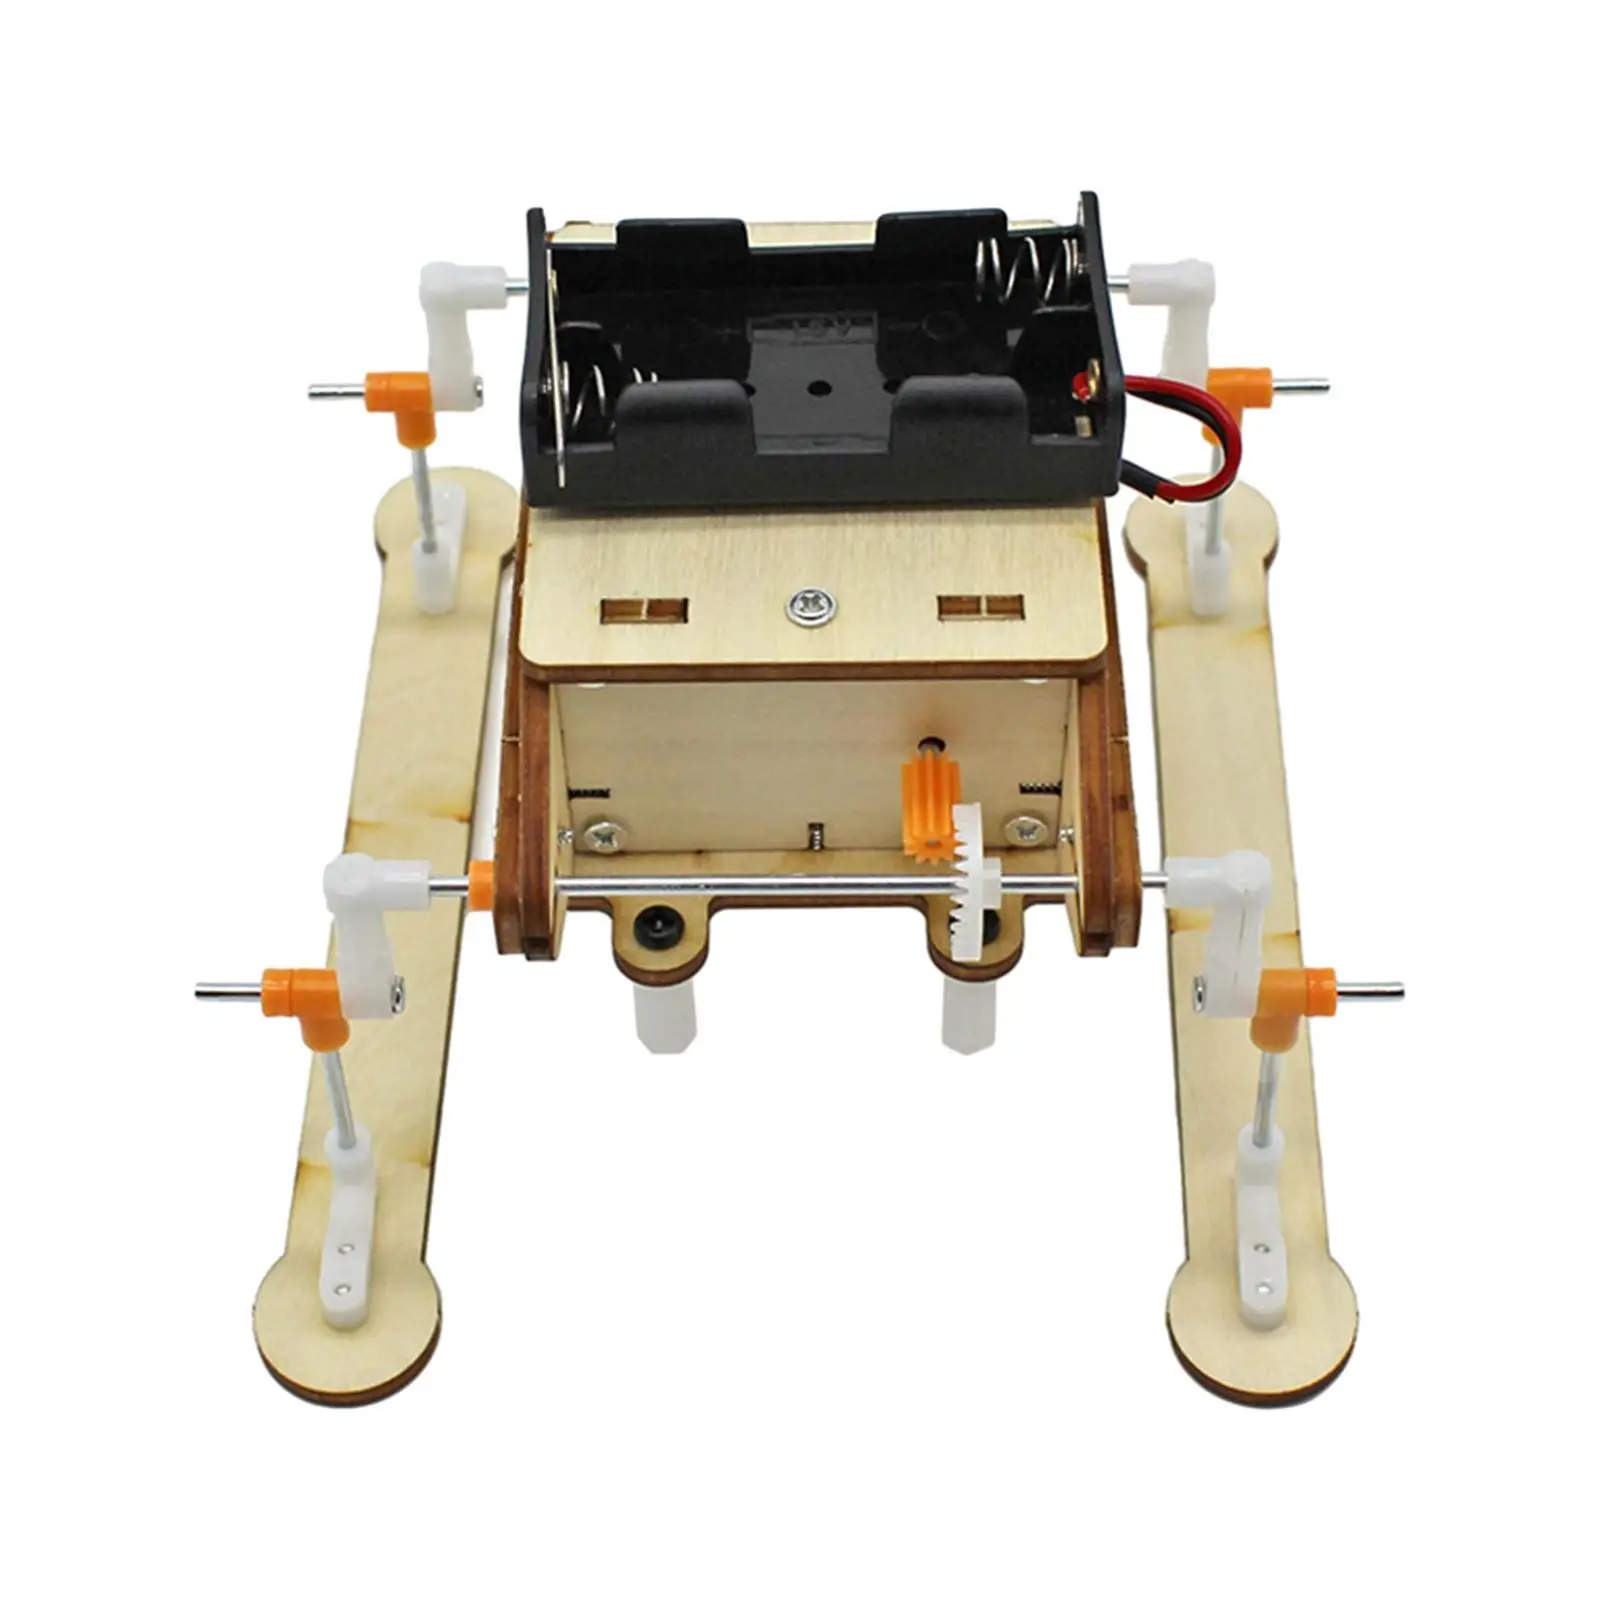 Science Experiment Building Kits Teaching Aid DIY Wood Robot Building Kits